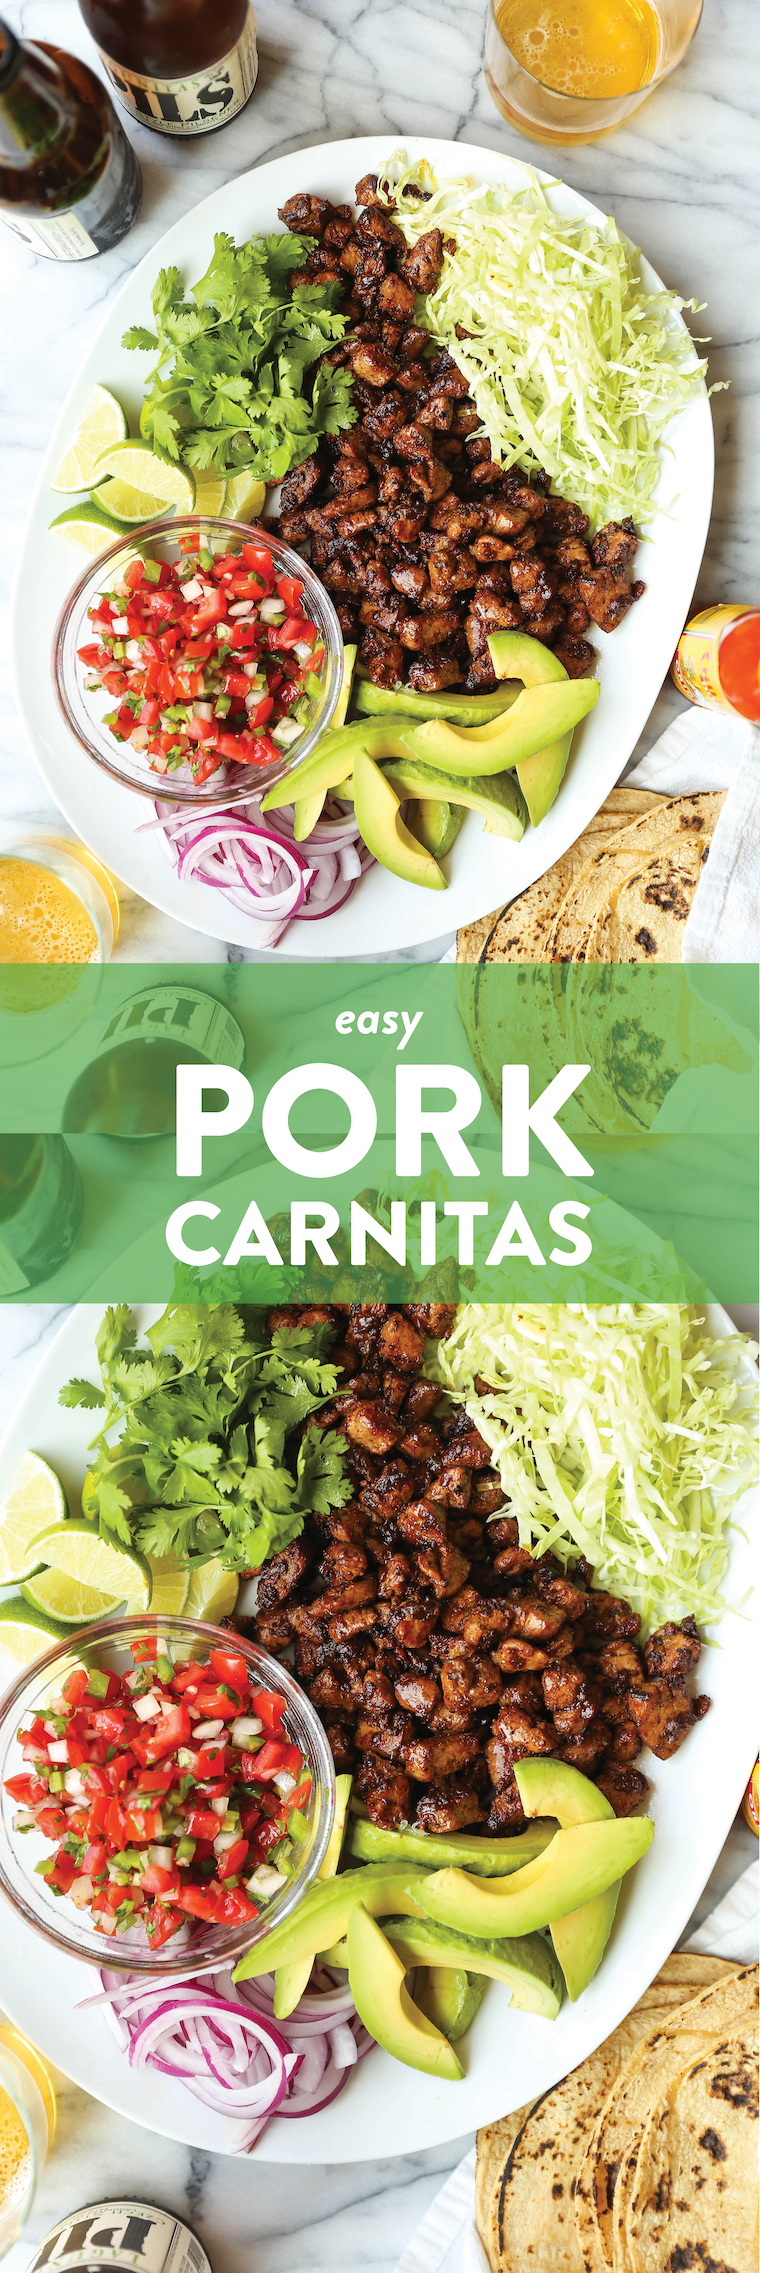 Easy Pork Carnitas - Juicy, tender pork carnitas made in 30 min, start to finish! No fuss, no hassle. Serve as tacos or burrito bowls. So easy, so so good.